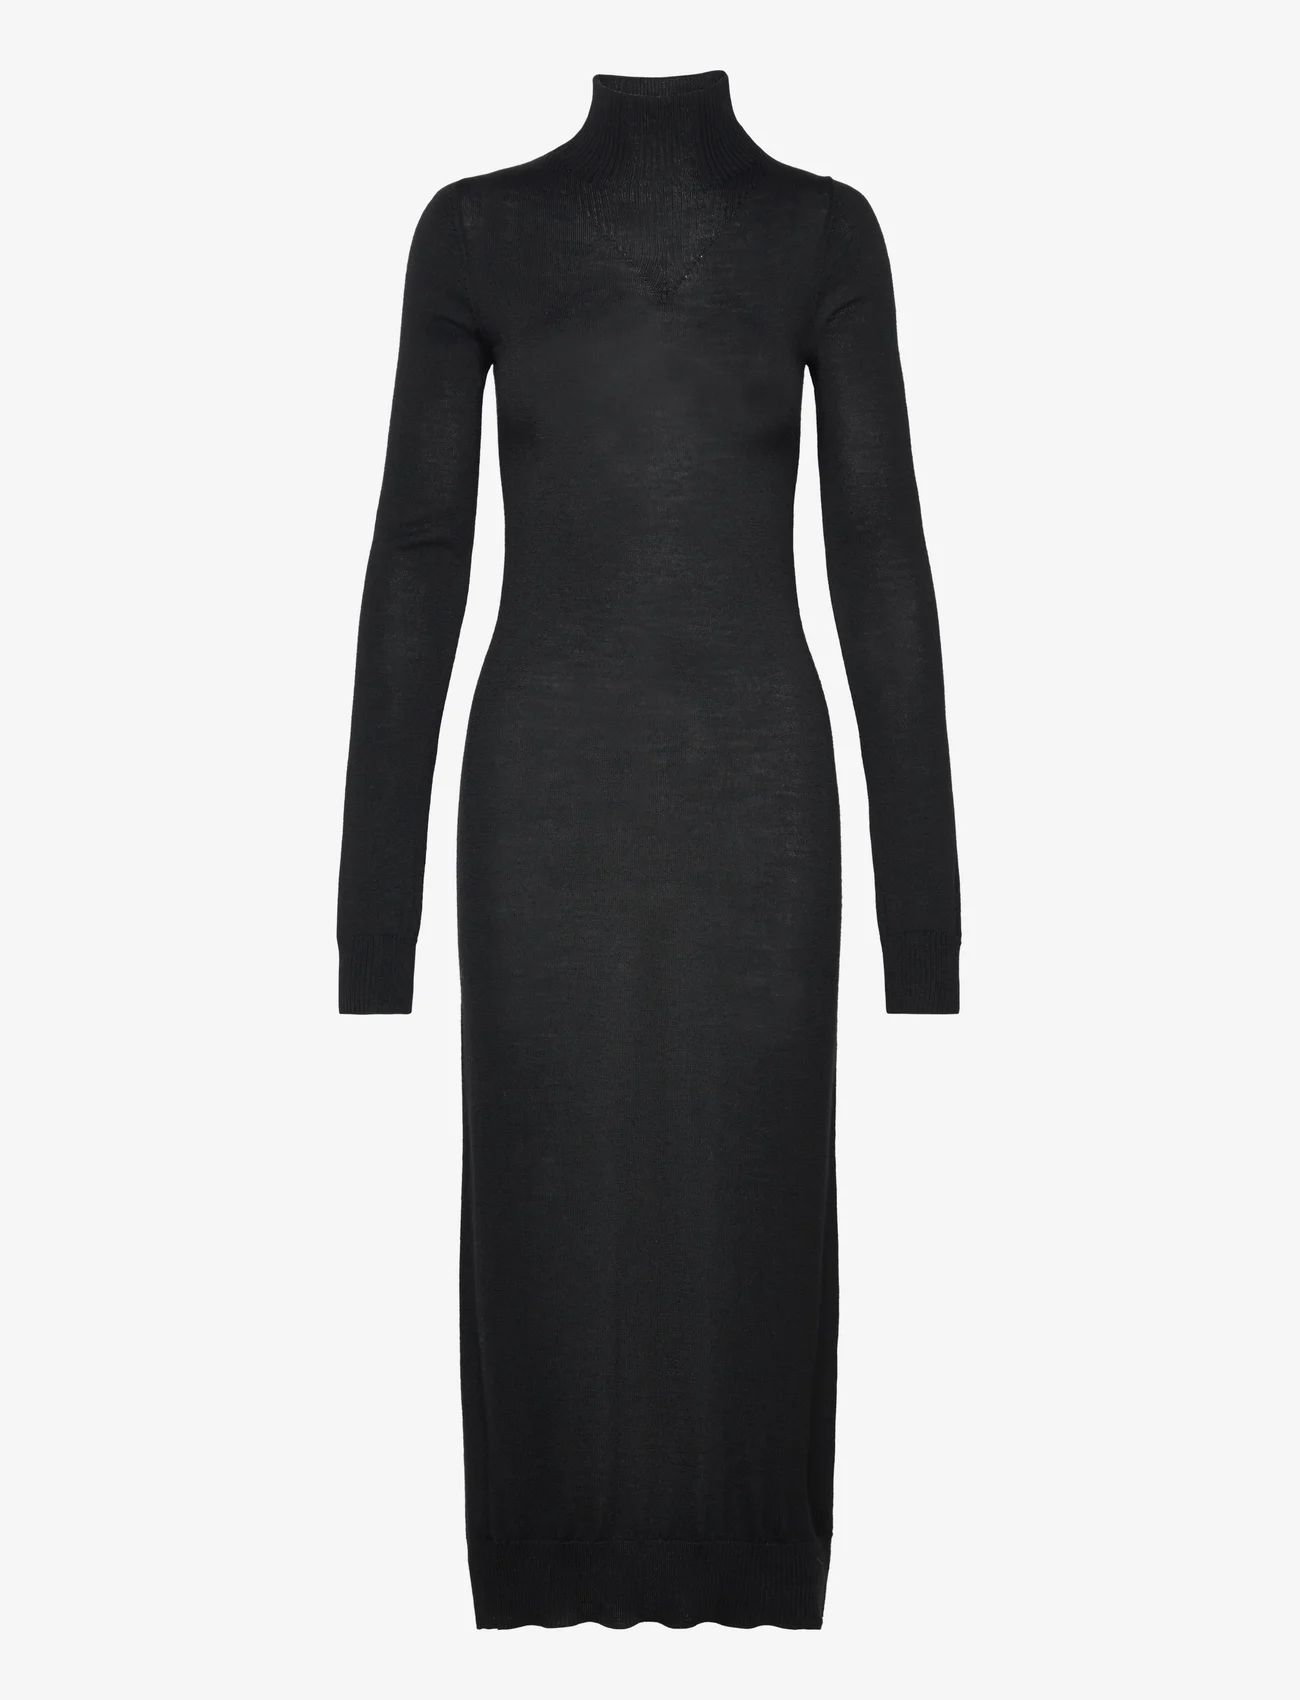 Filippa K - Knit Turtleneck Dress - etuikleider - black - 0